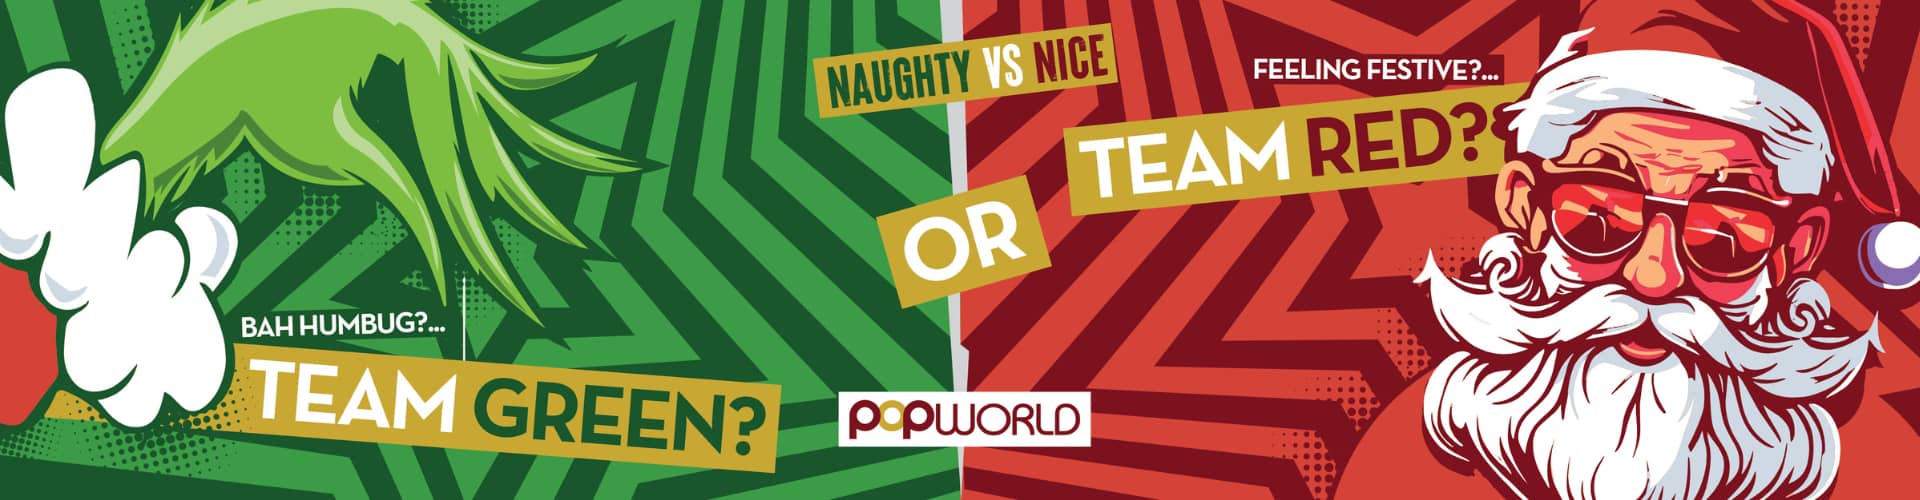 Popworld London Watling Street - Naughty vs Nice - Are you Team Green or Team Red?